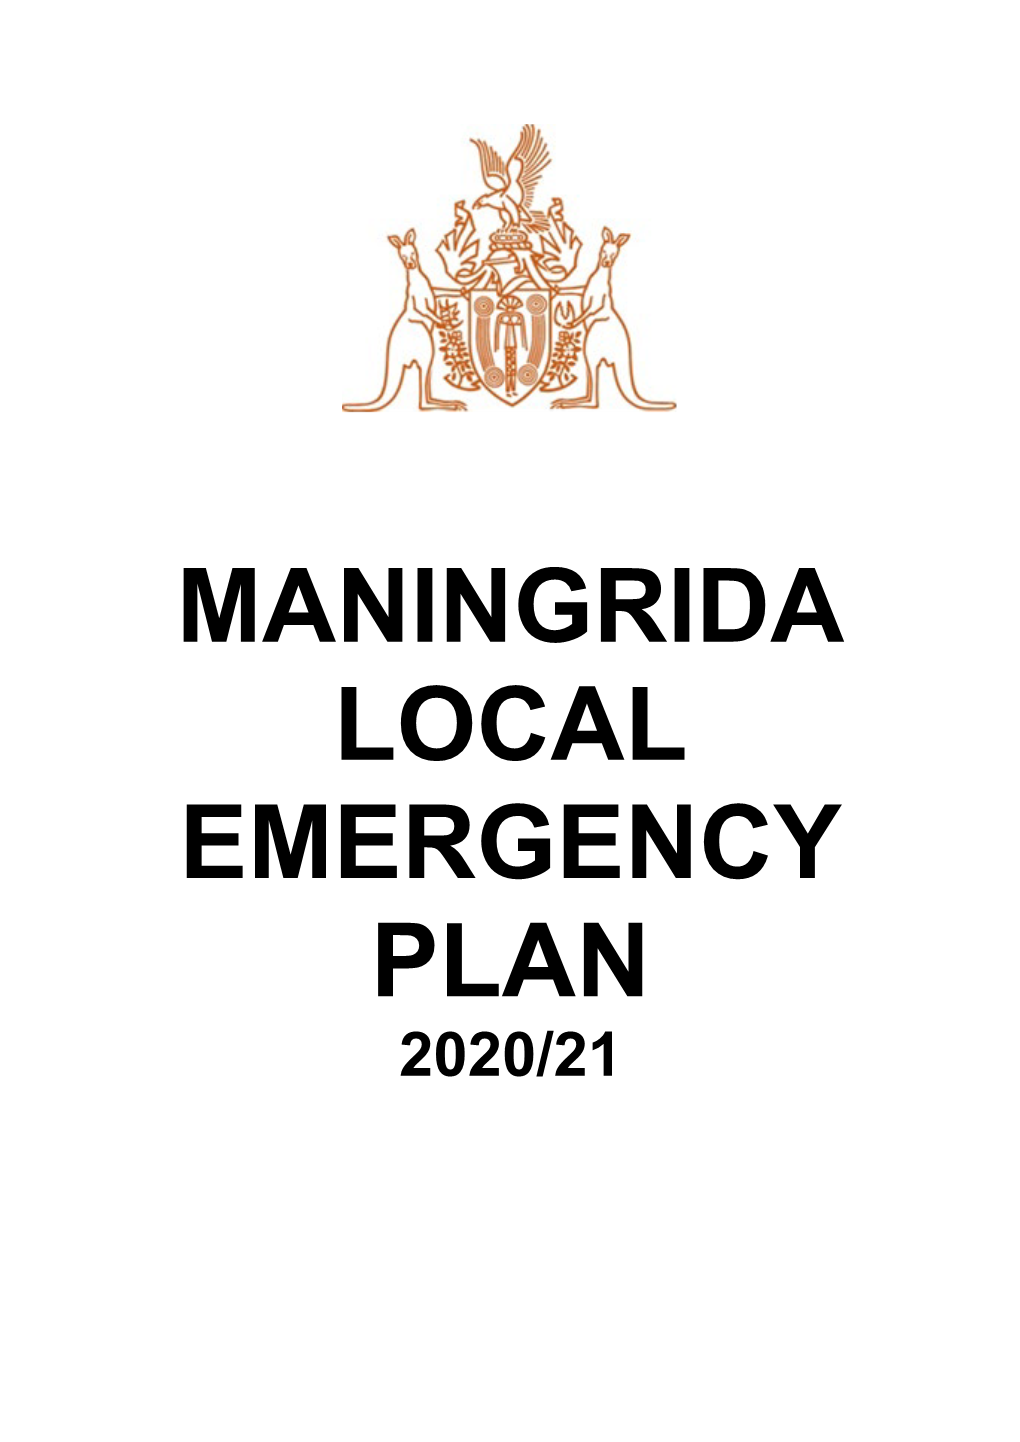 Maningrida Local Emergency Plan 2020/21